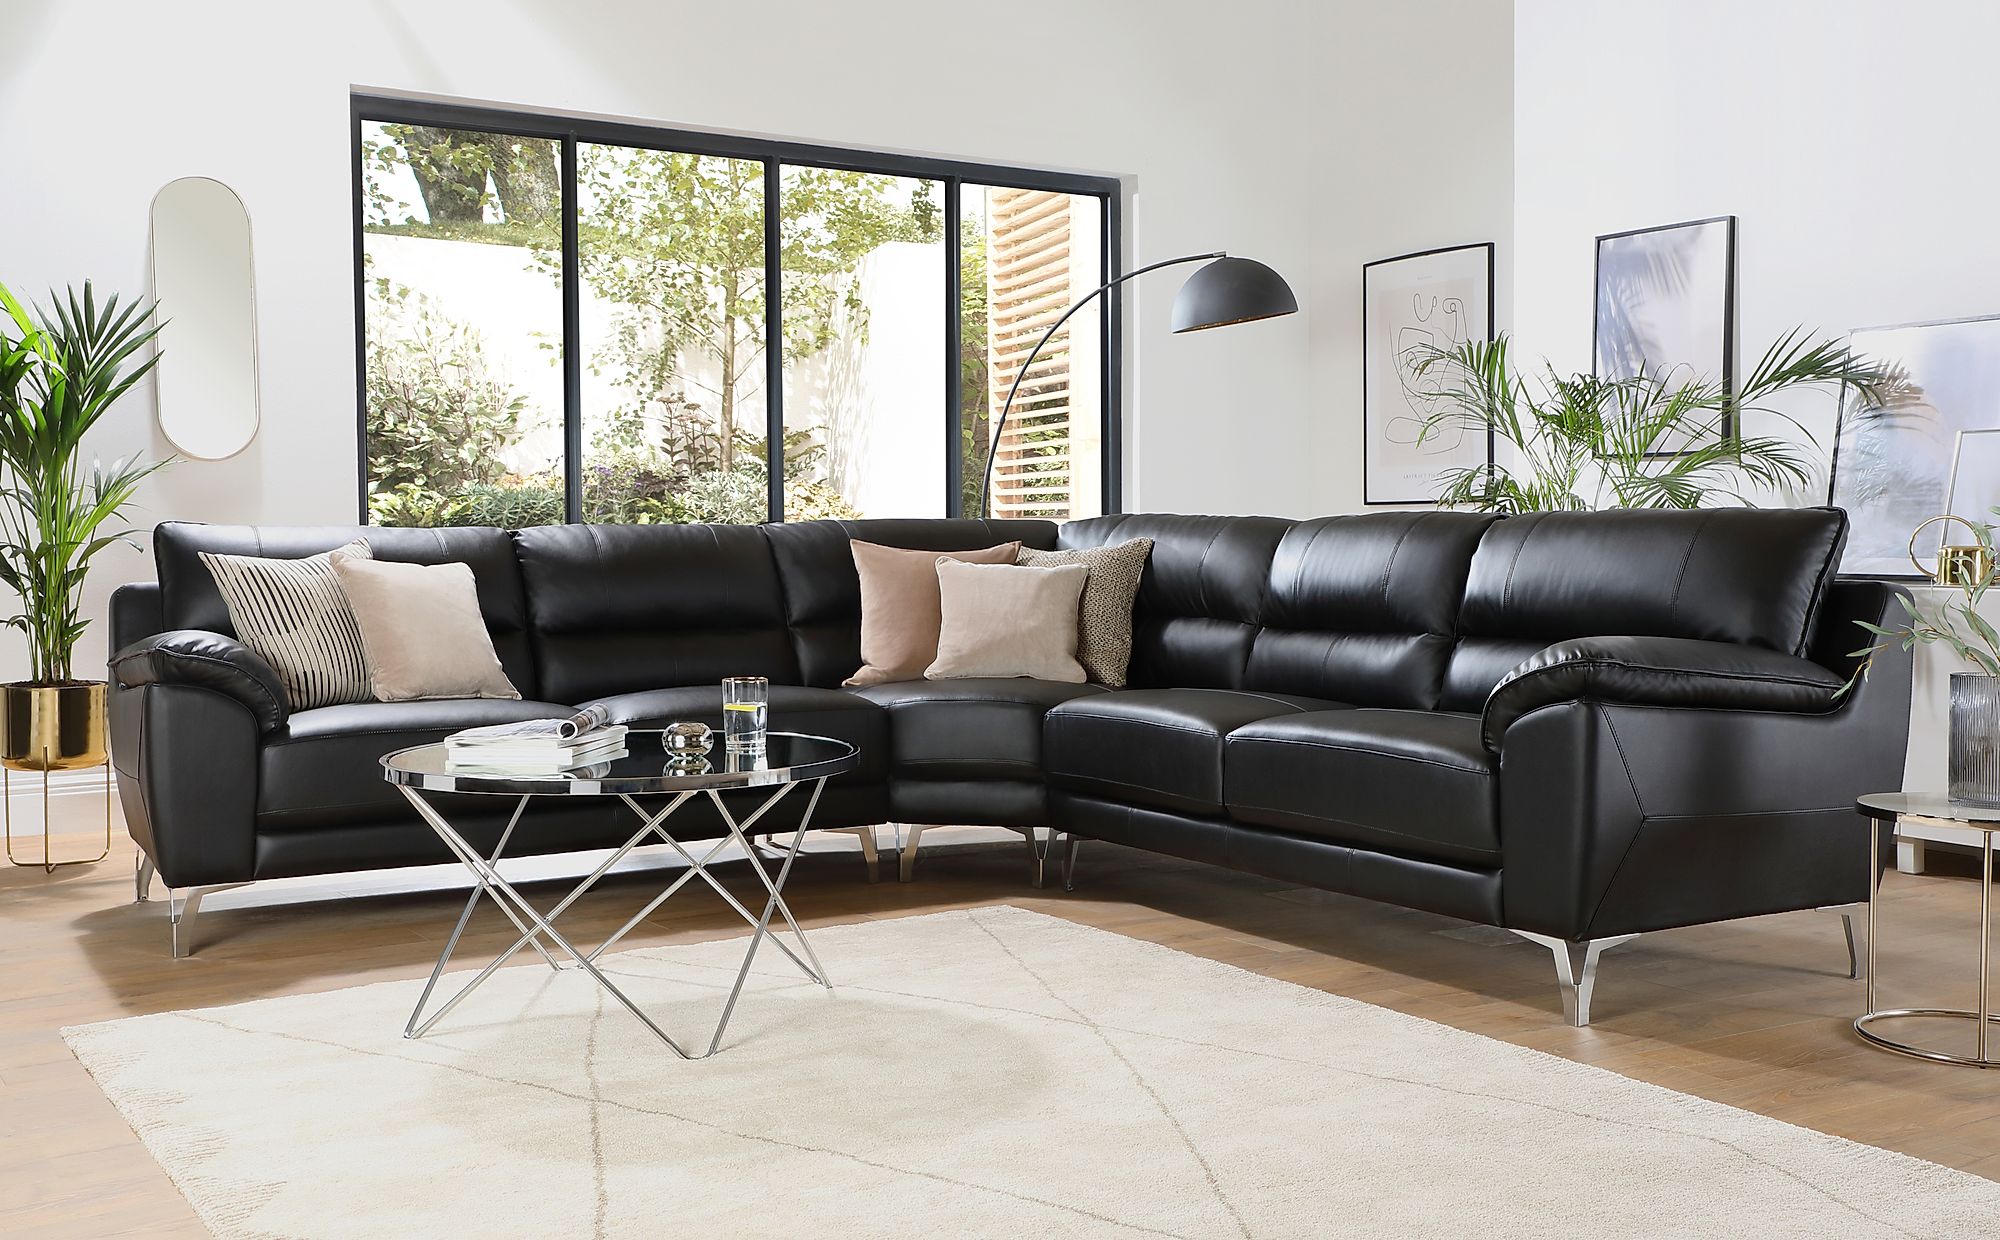 black leather corner sofa with white stitching